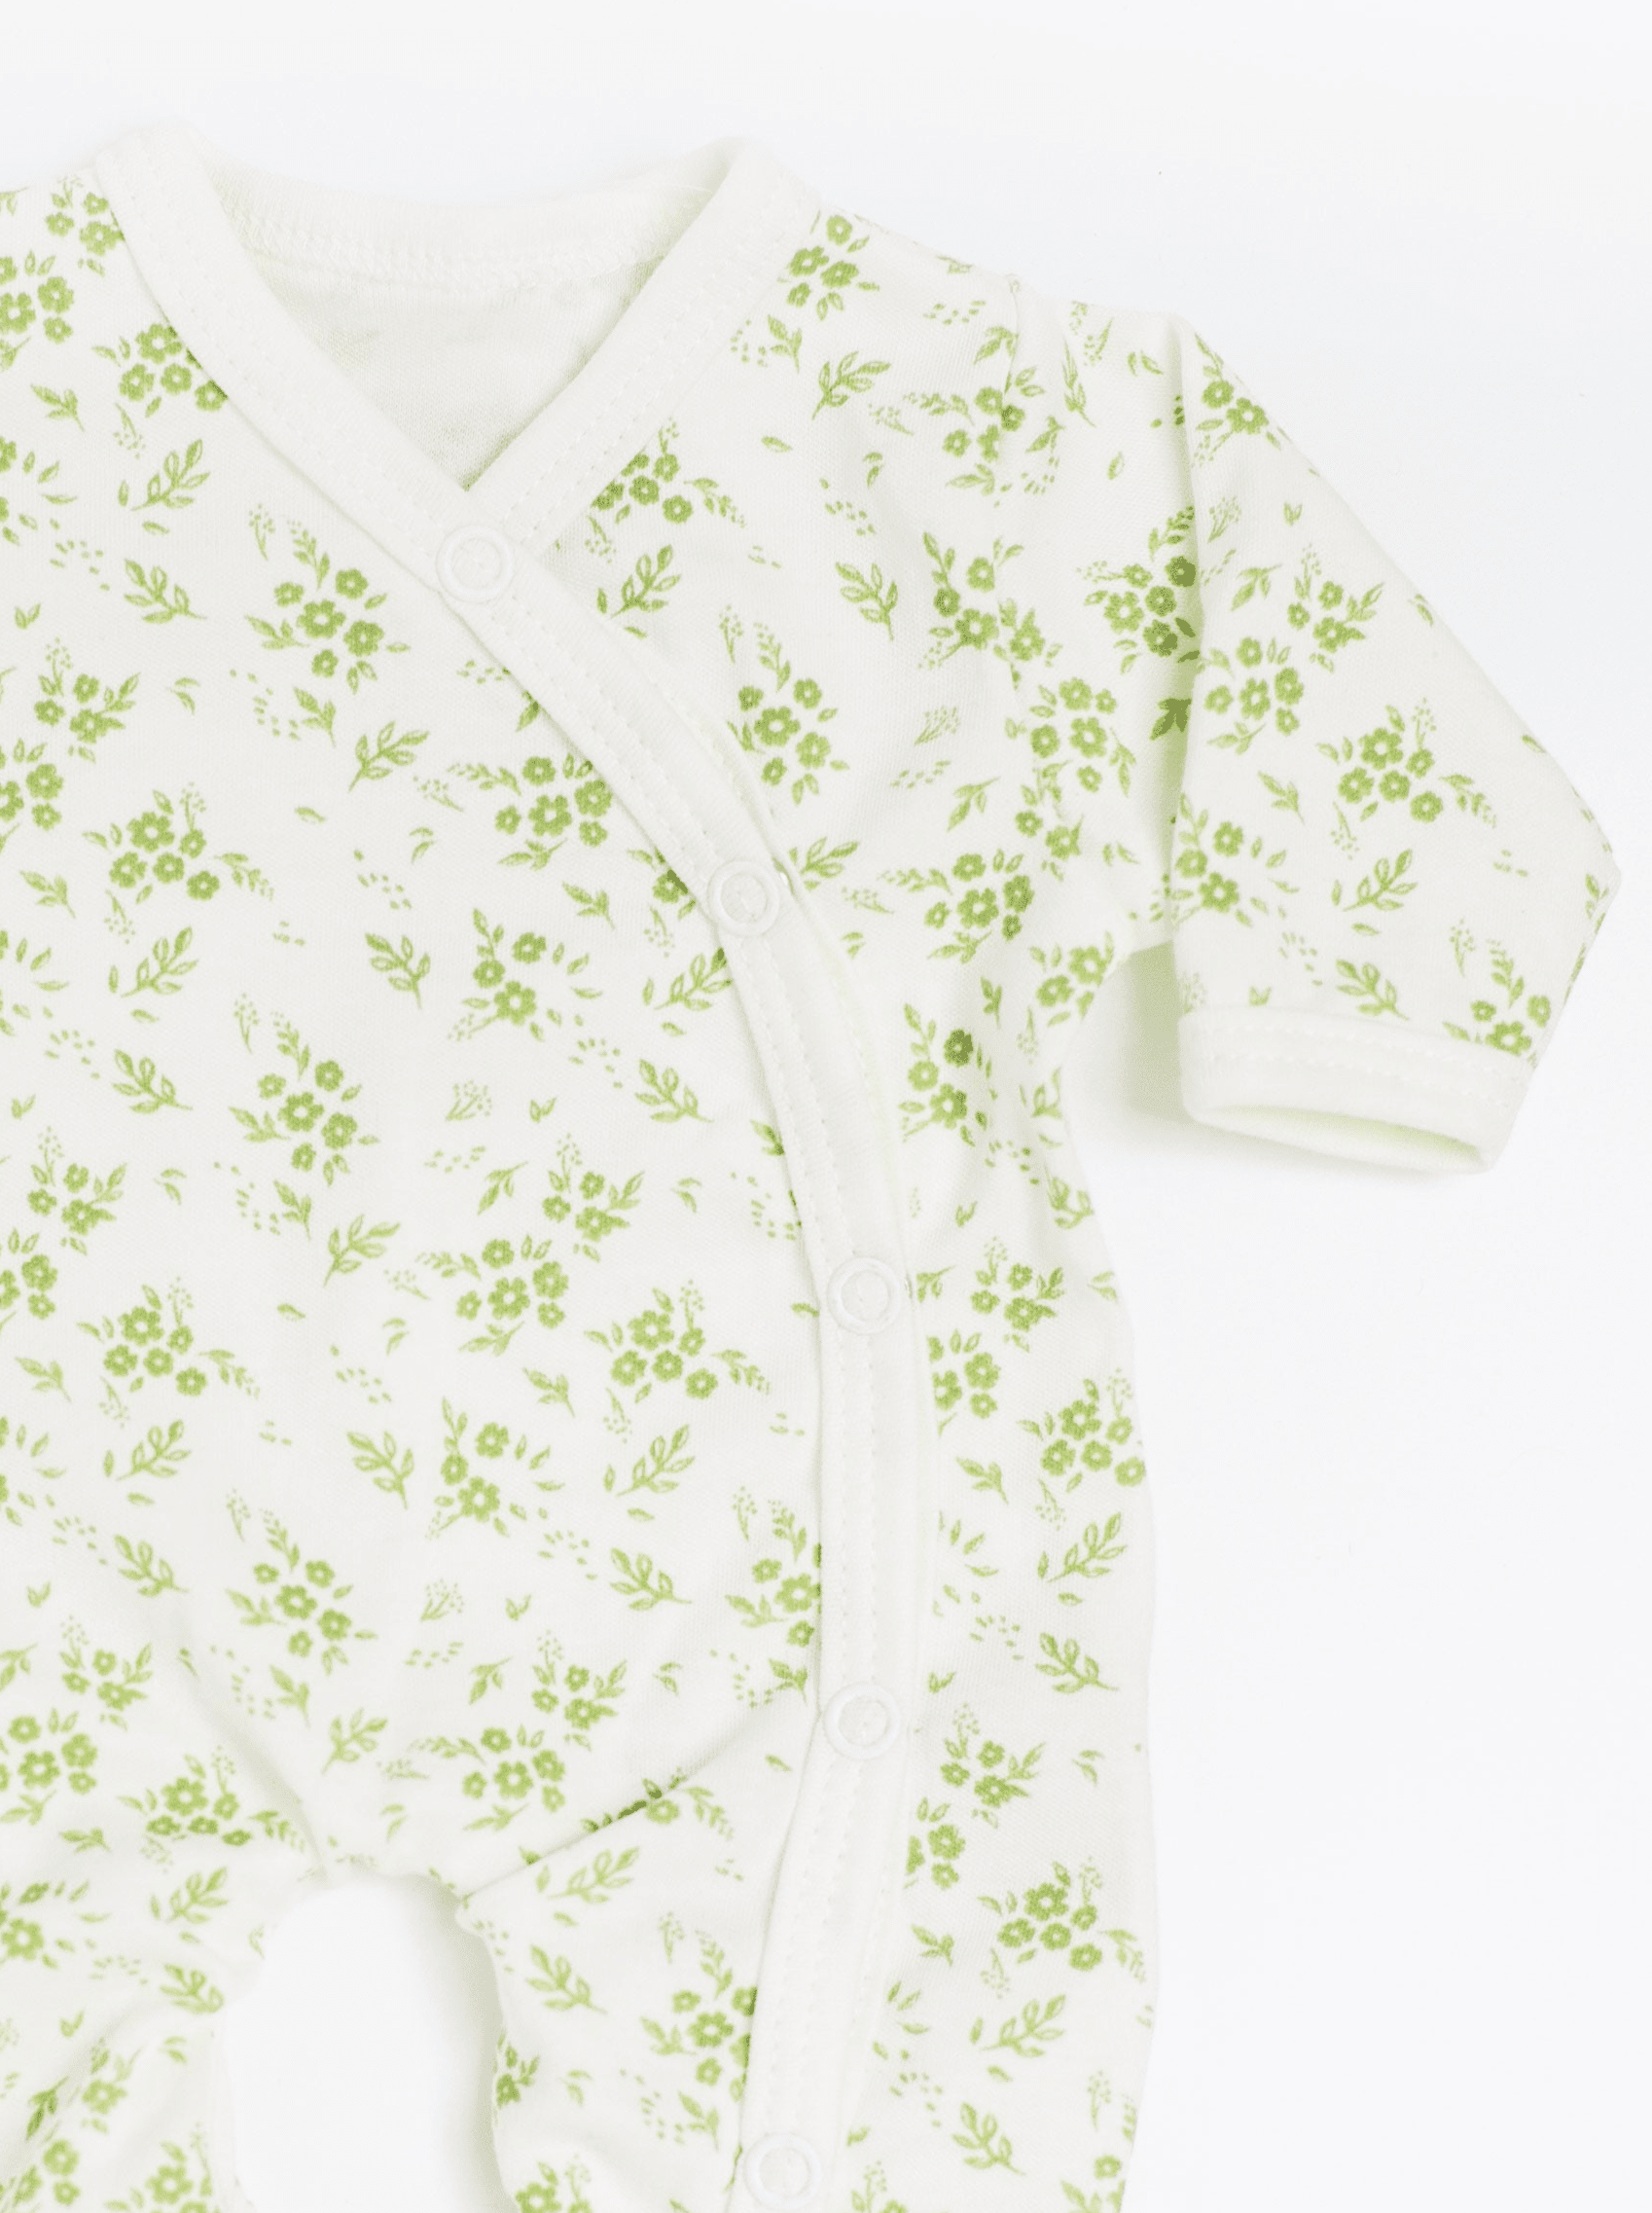 Preemie Girl Sleepsuit, Apple Floral, Premium 100% Organic Cotton Sleepsuit / Babygrow Tiny & Small 